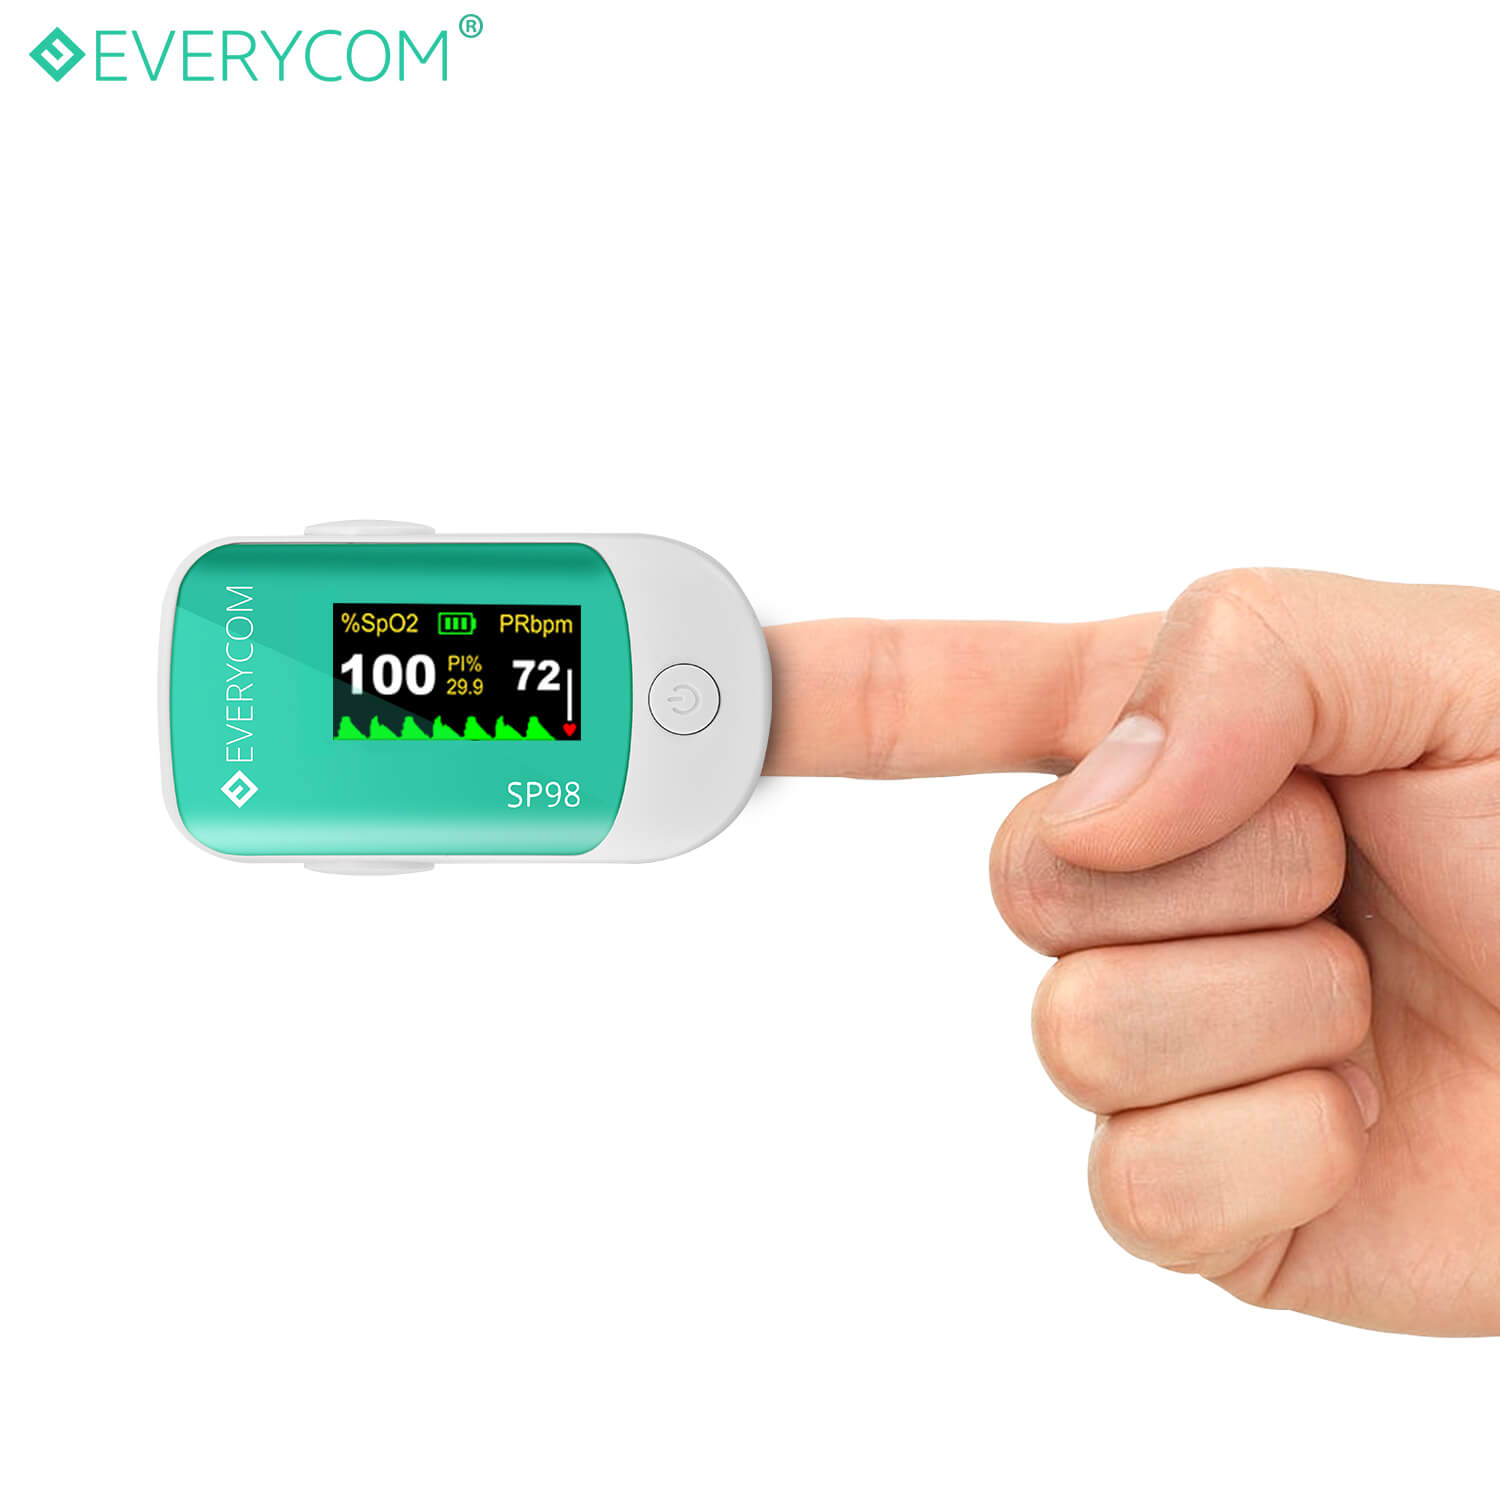 Everycom SP98 | Fingerprint Pulse Oximeter